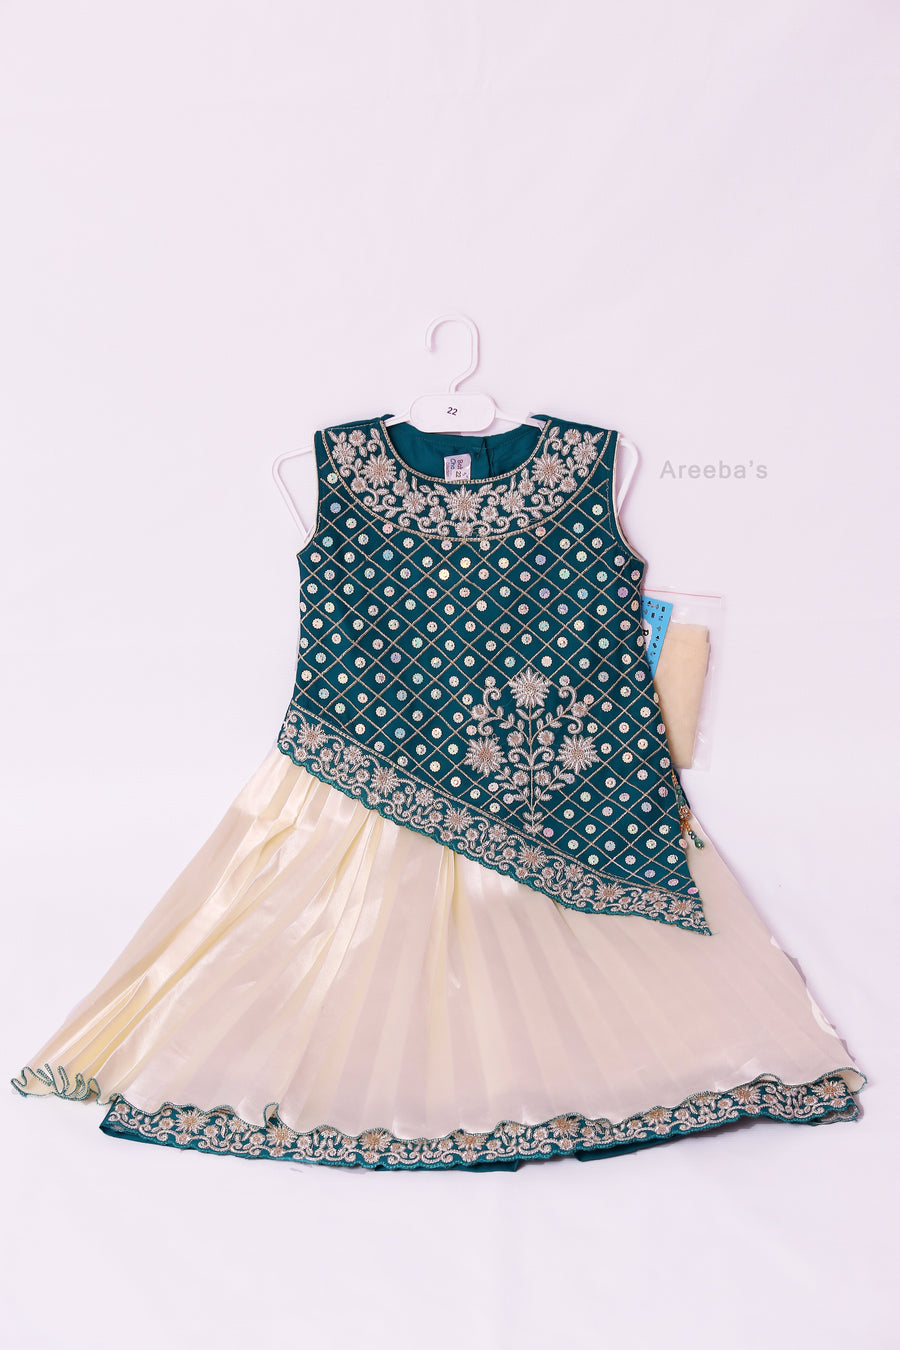 Girls BC46- Areeba's Couture